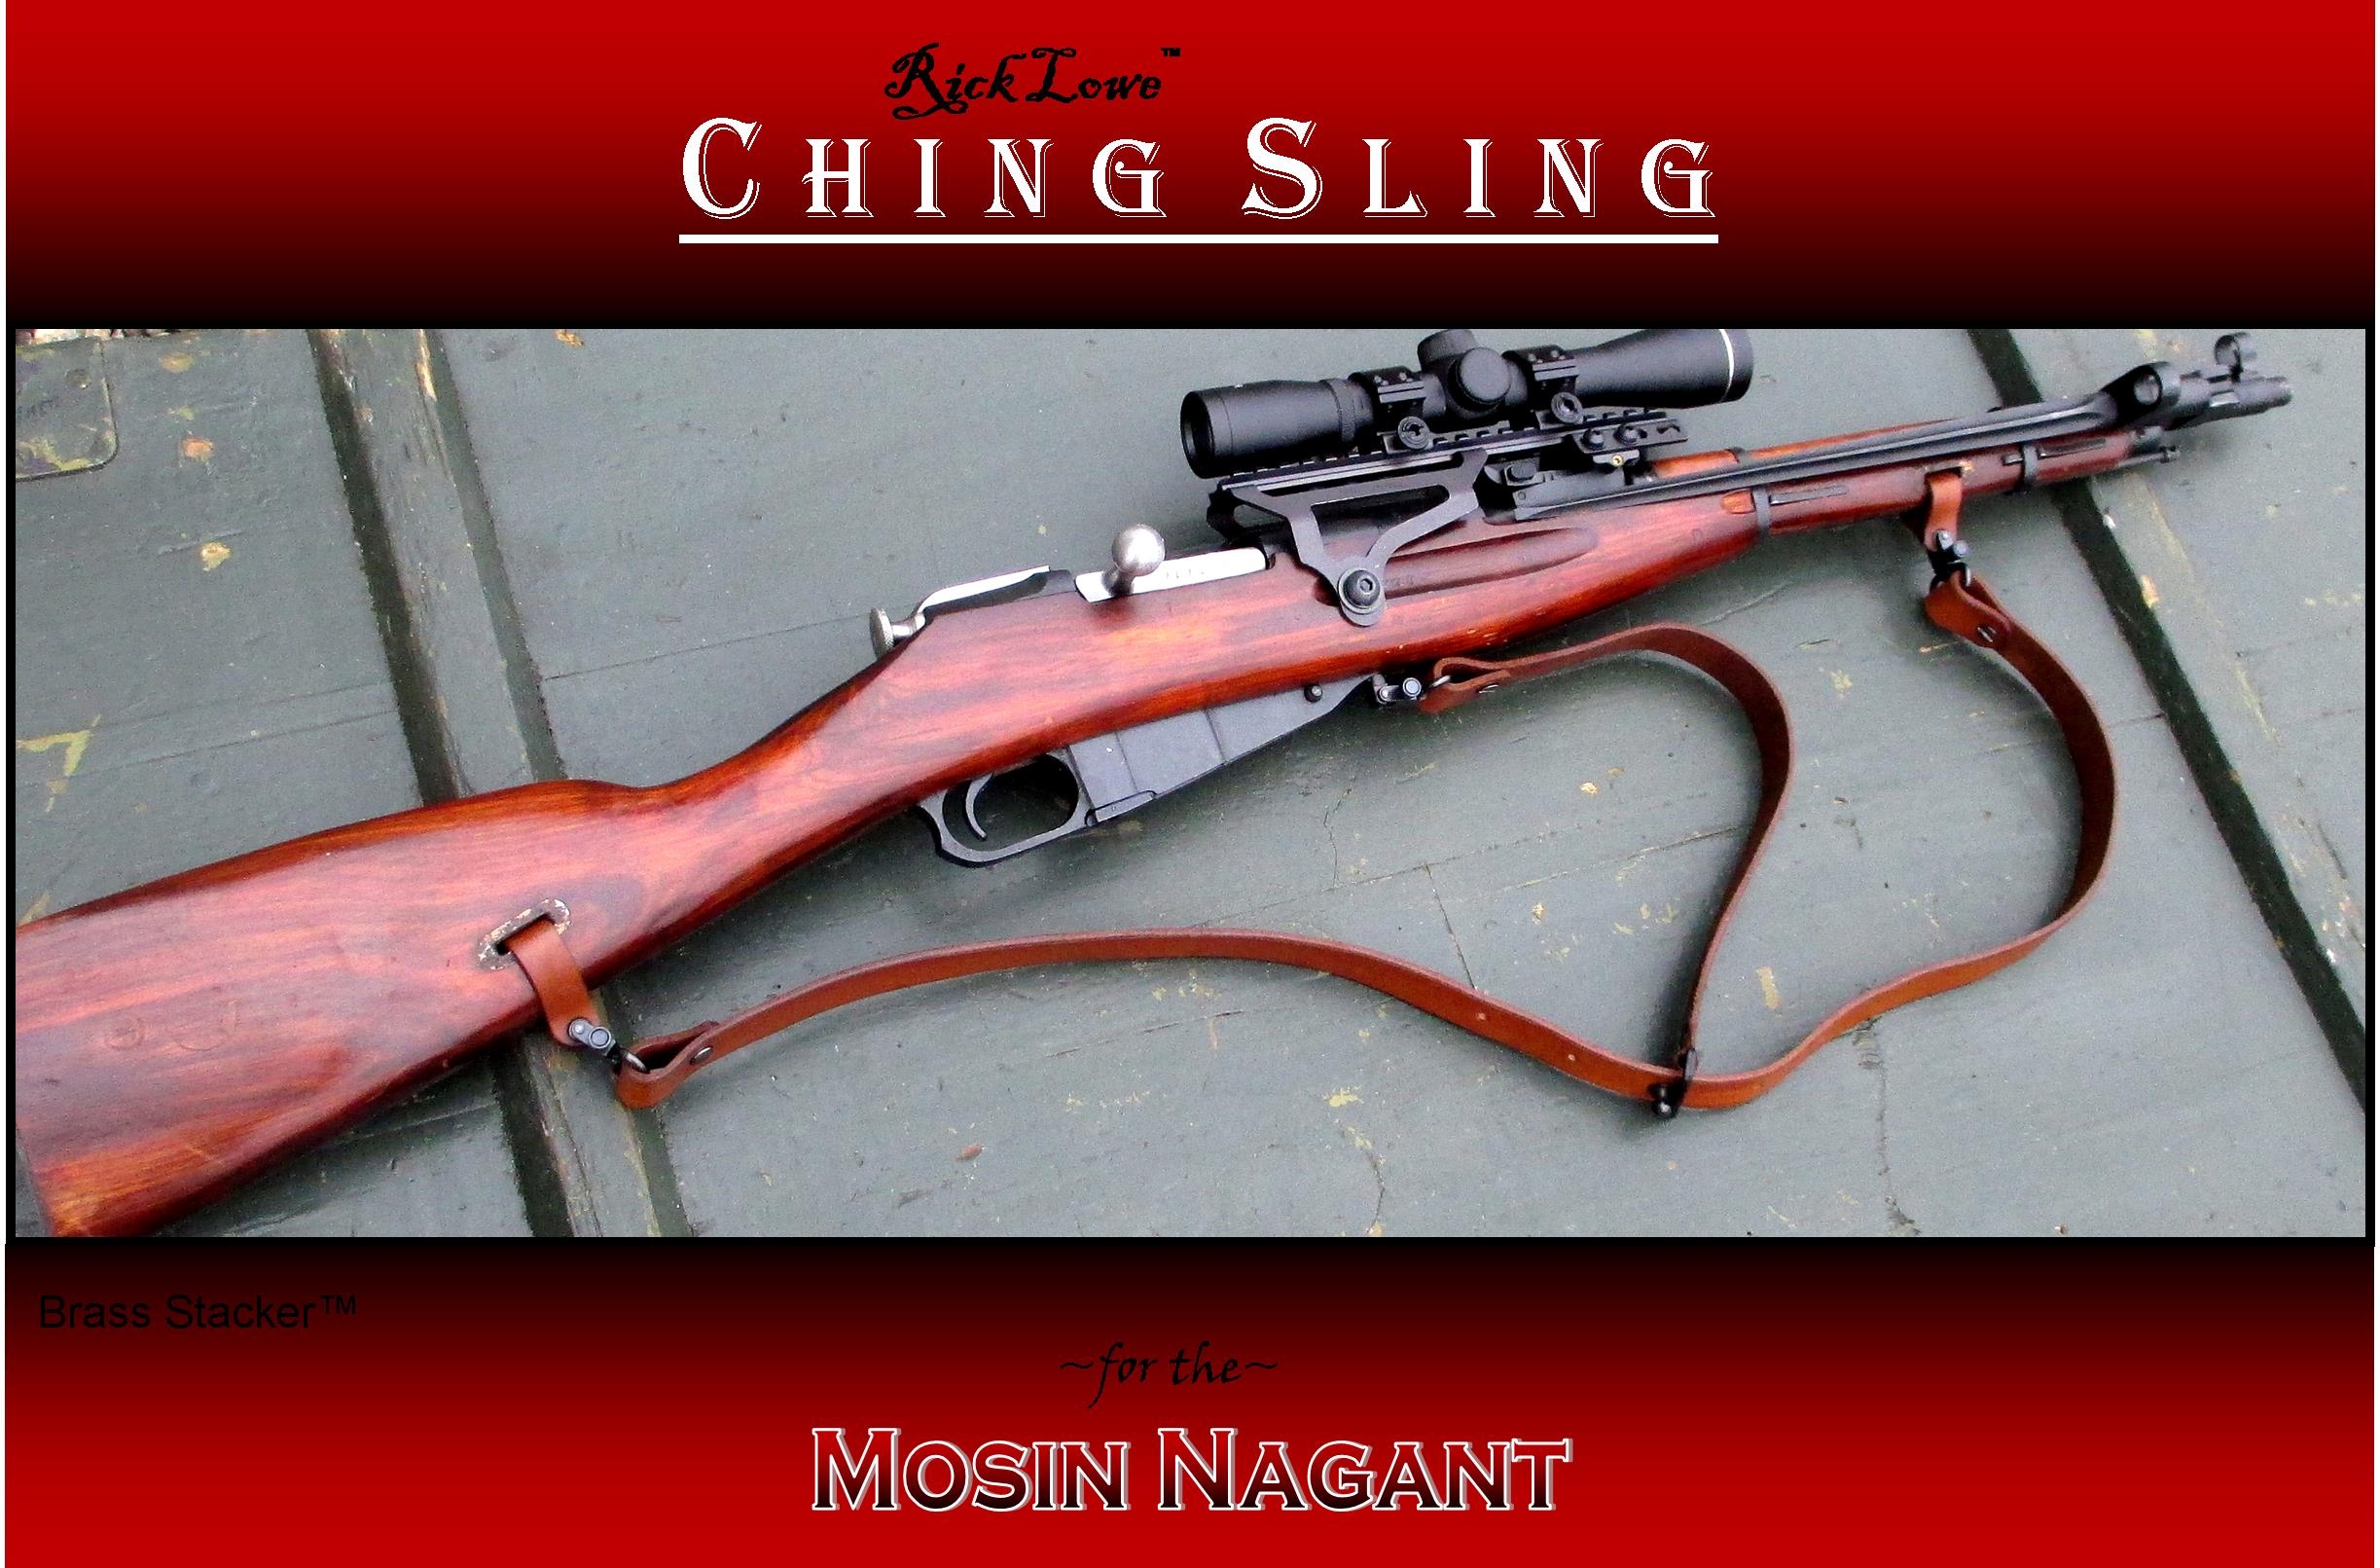 Brass Stacker™ RLO Custom Leather Mosin Nagant Ching Sling